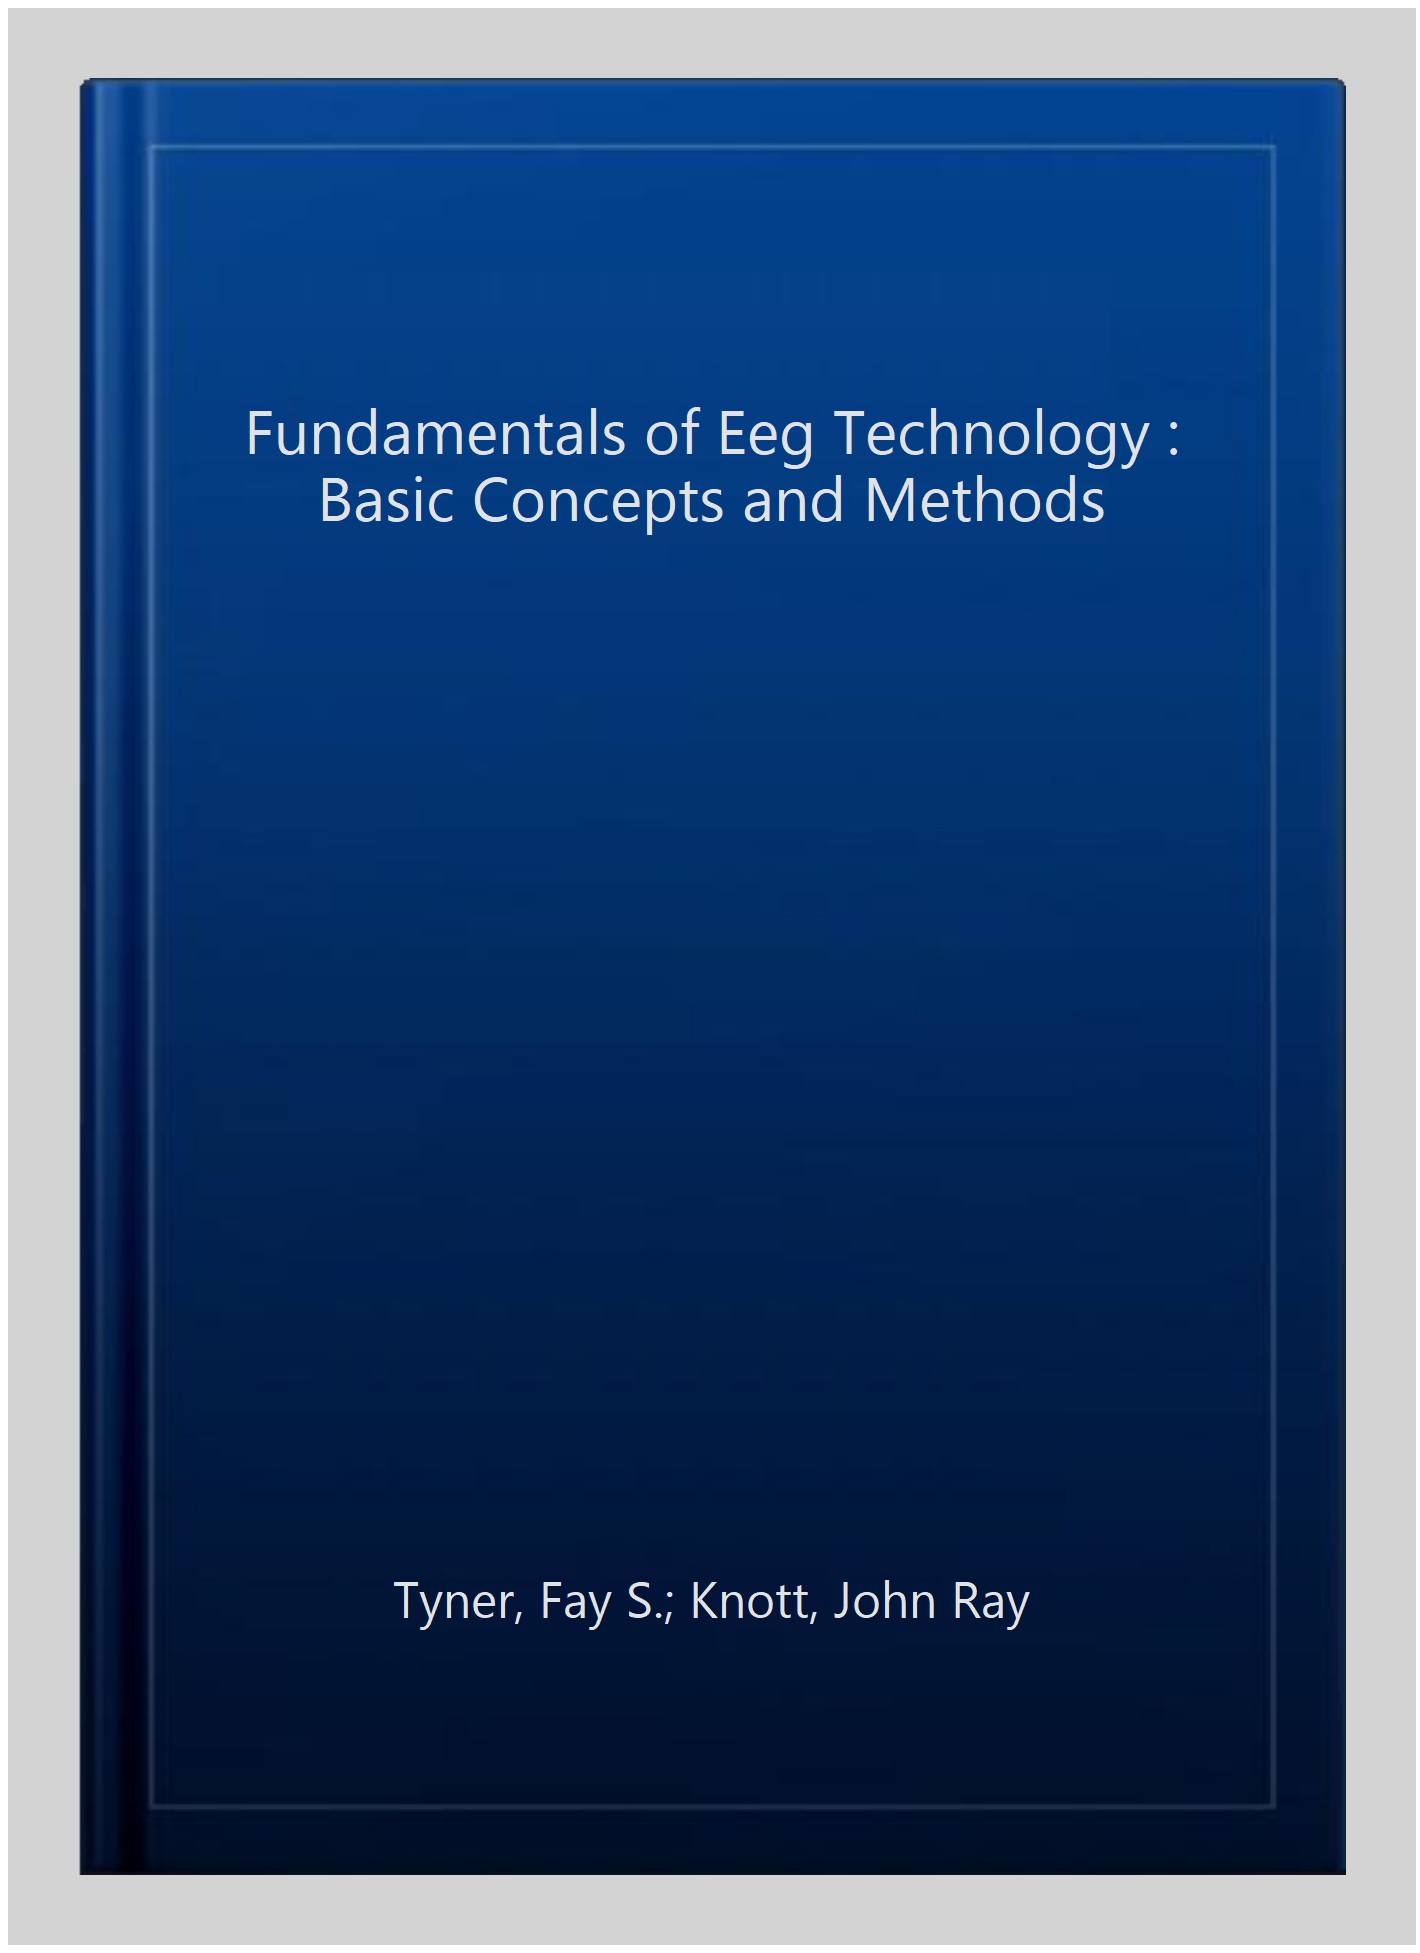 Fundamentals of Eeg Technology : Basic Concepts and Methods - Knott, John R.; Mayer, W. Brem, Jr.; Tyner, Fay S.